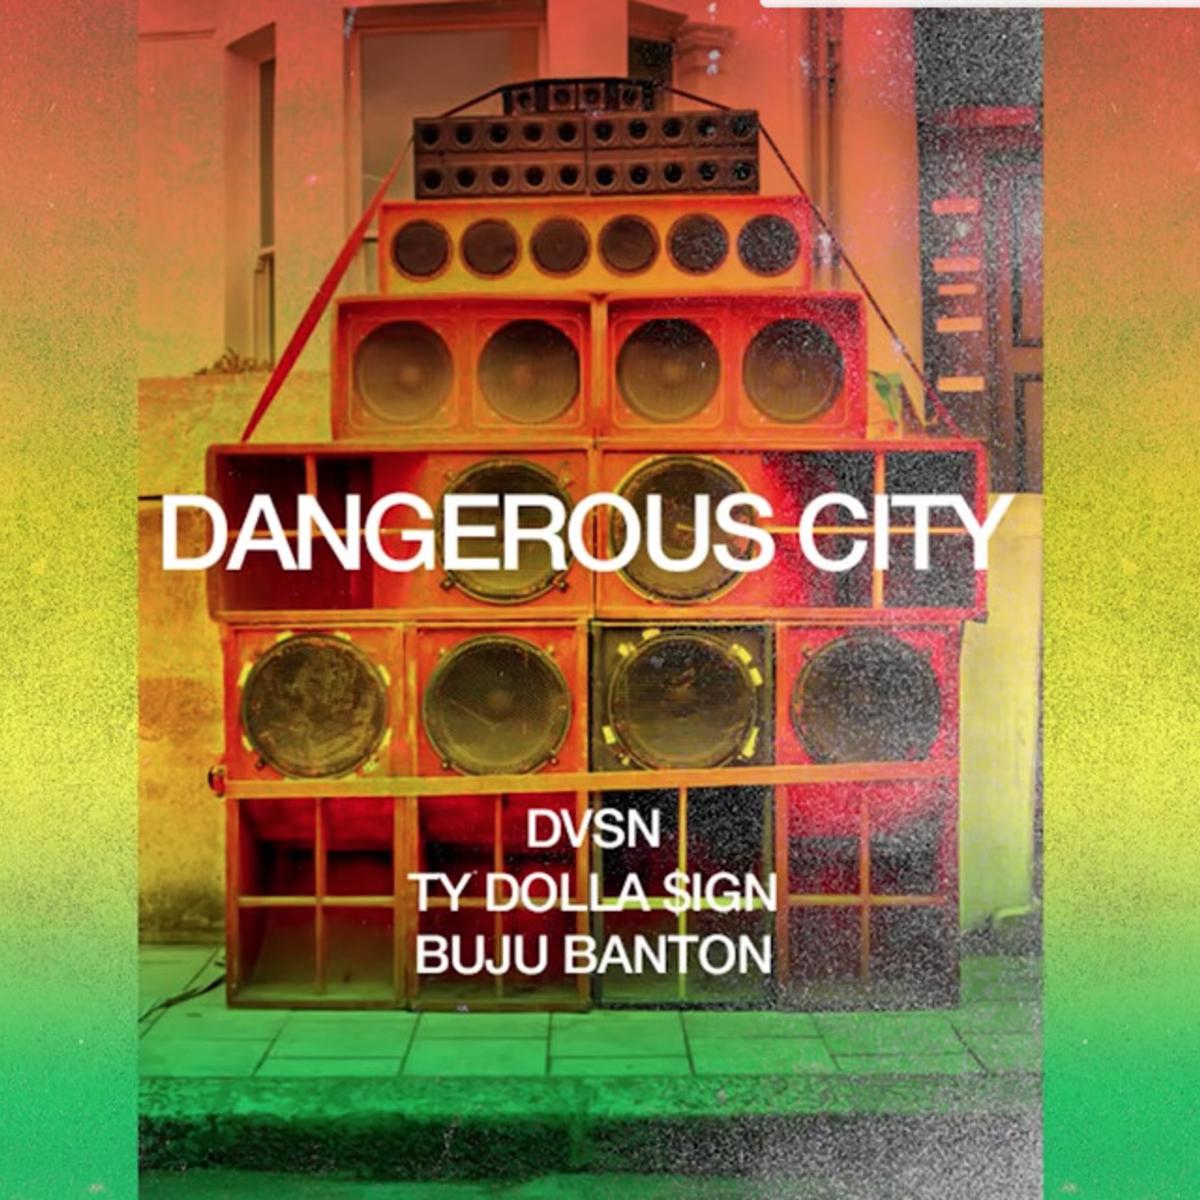 dvsn, Ty Dolla $ign & Buju Banton Connect For “Dangerous City”